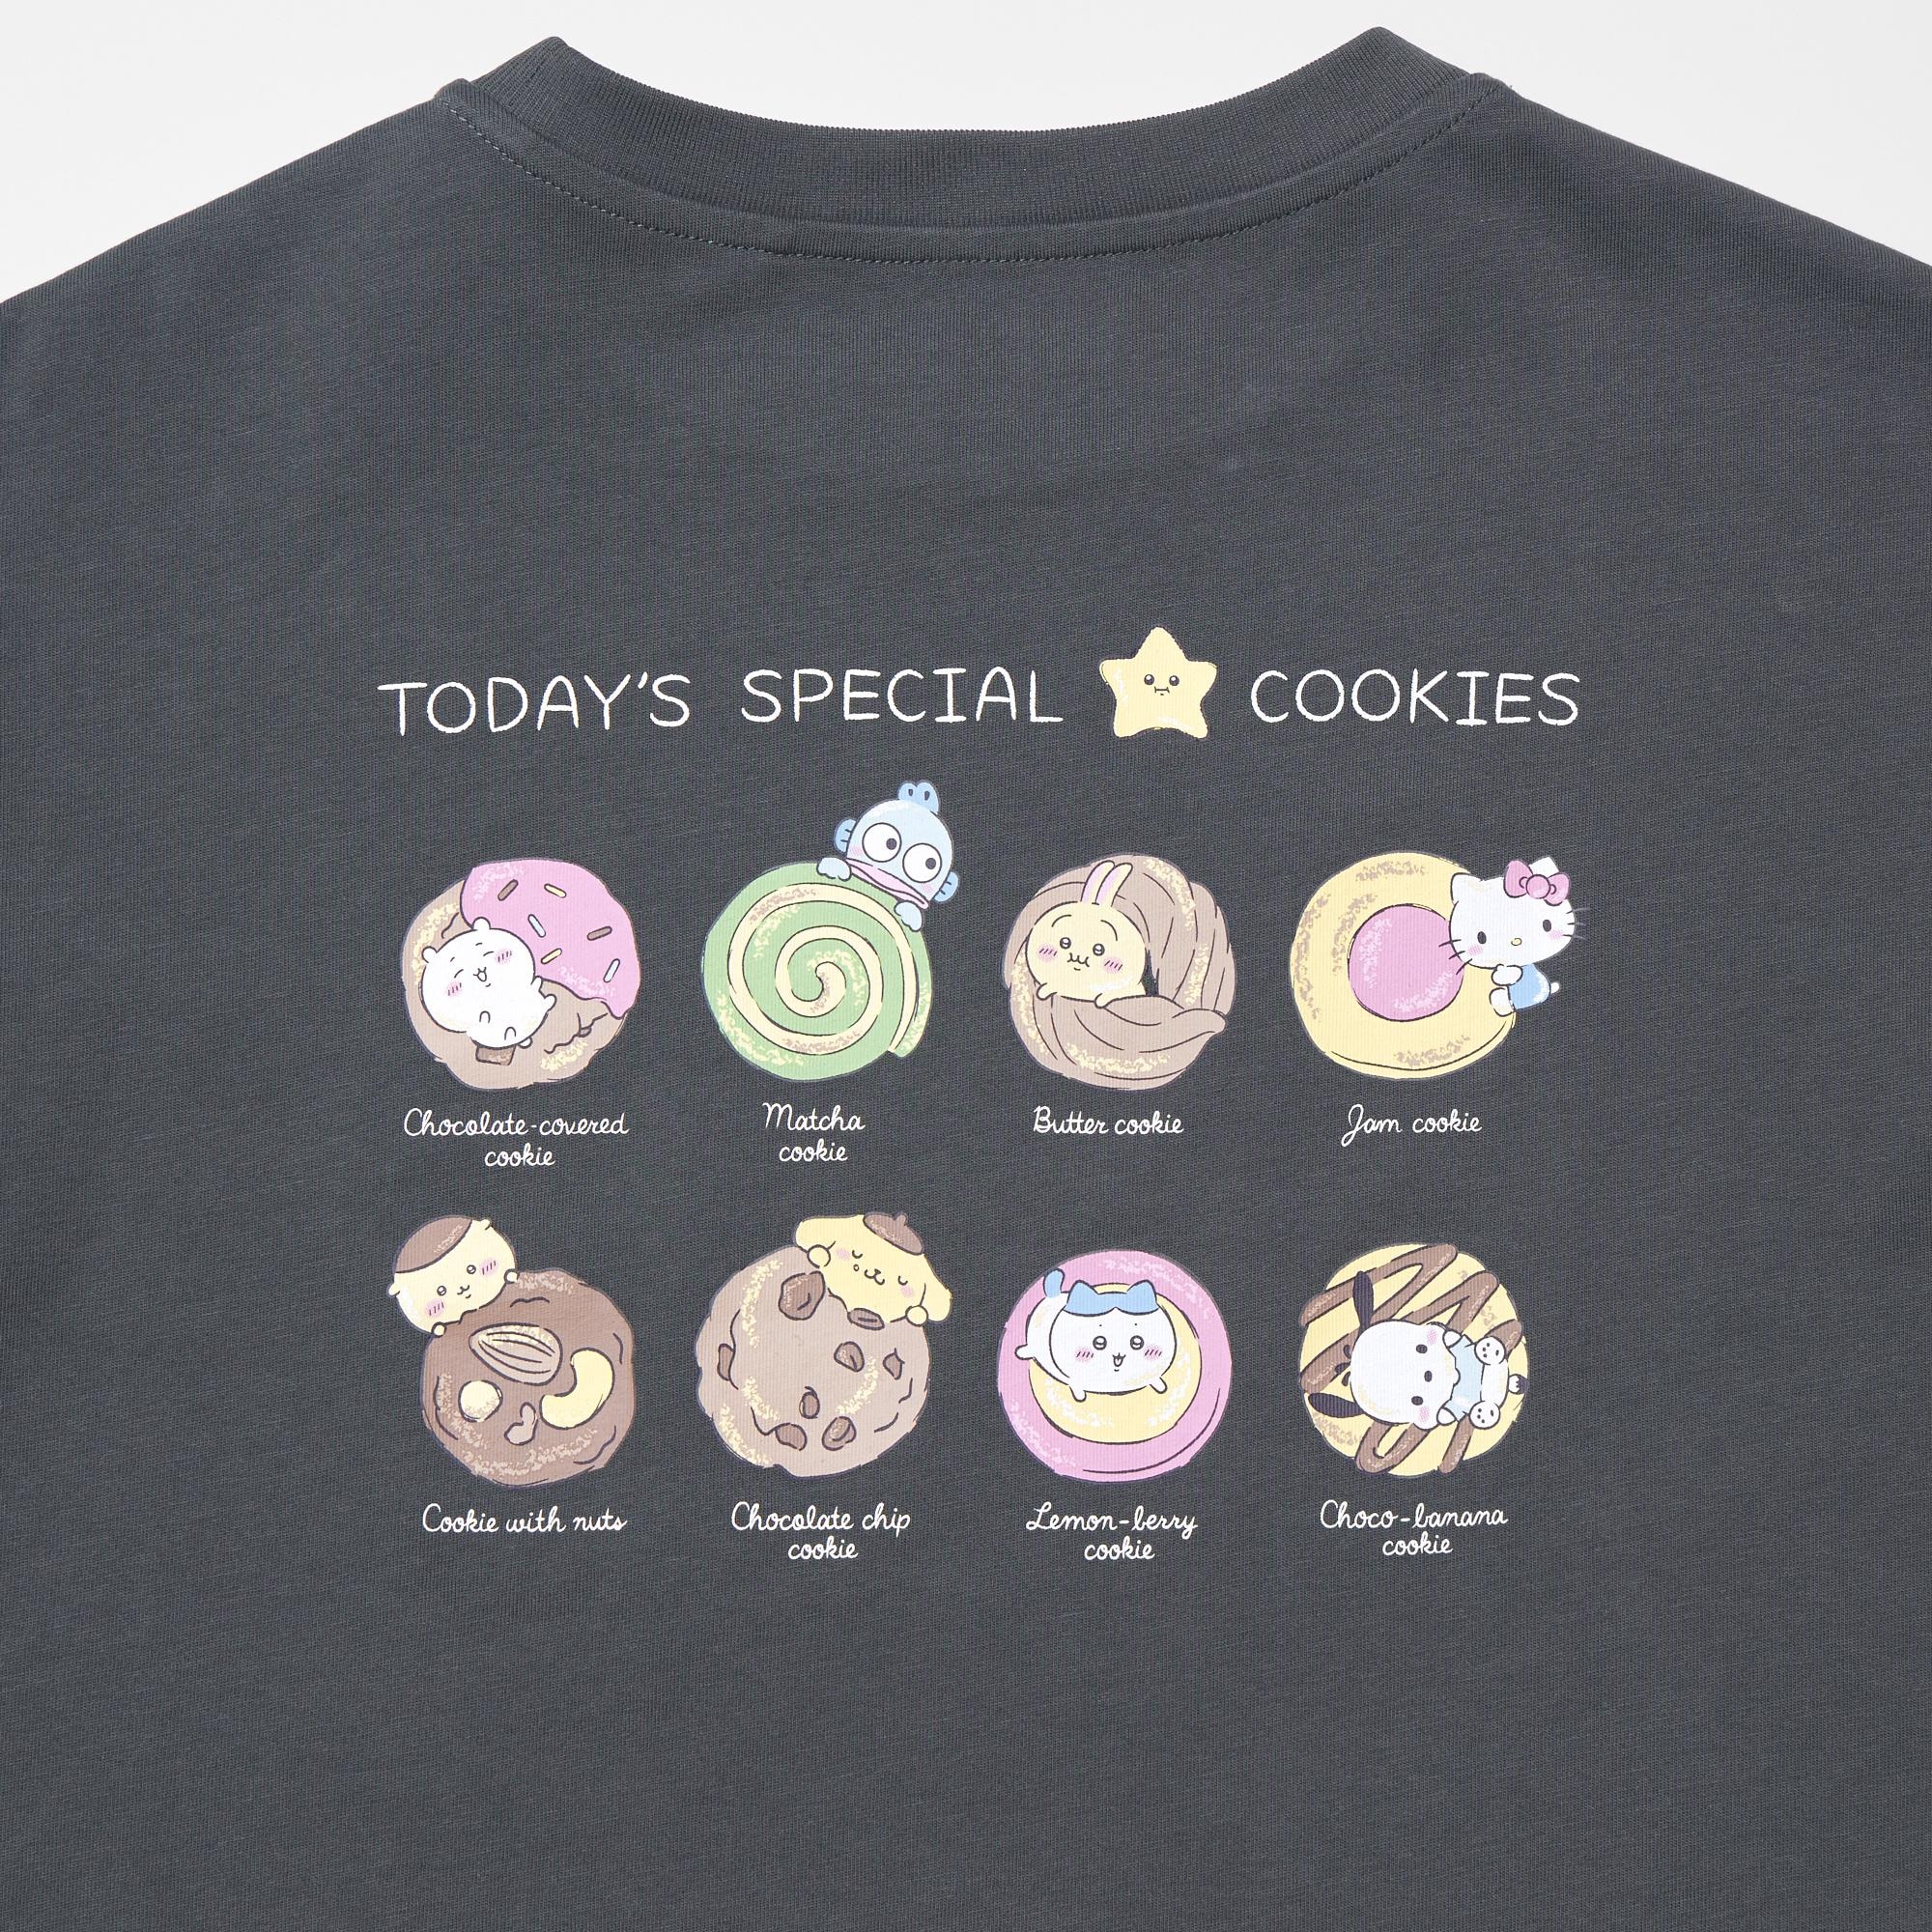 Chiikawa × Sanrio characters: Sweets Collection UT (Short-Sleeve Graphic T-Shirt